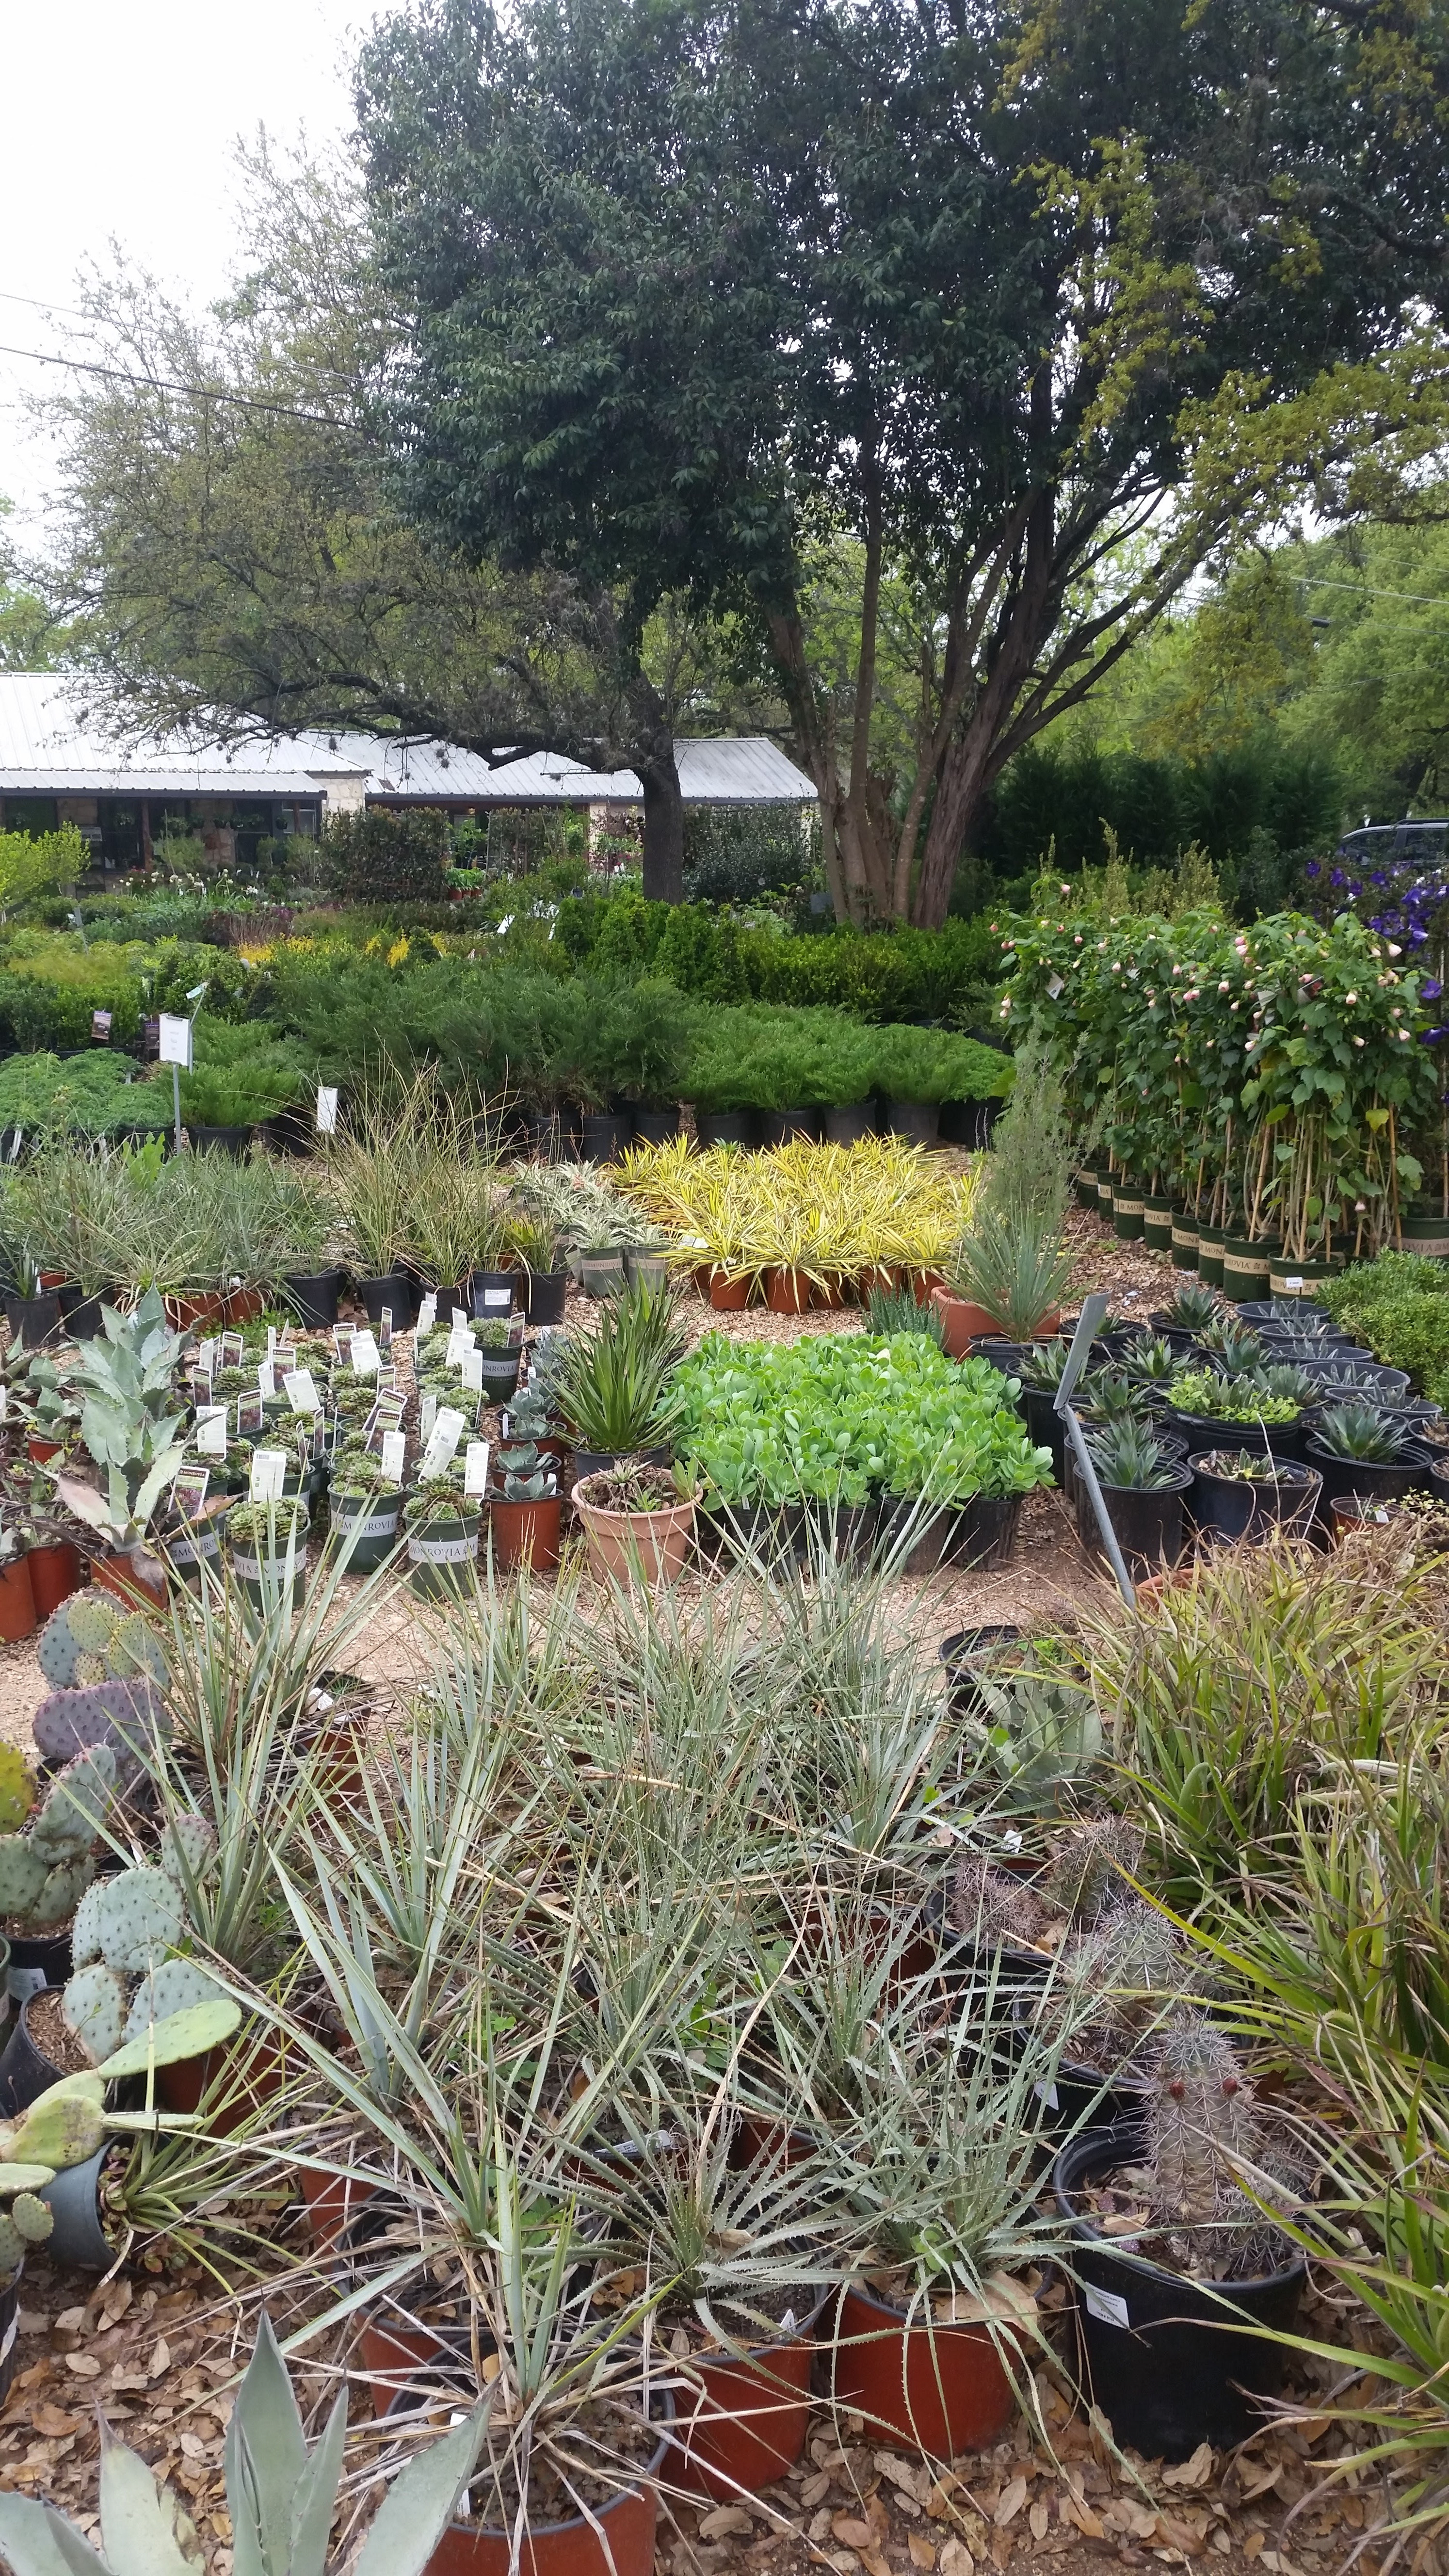 Best ideas about Austin Landscape Supply
. Save or Pin Leaf Landscape Supply Austin Now.